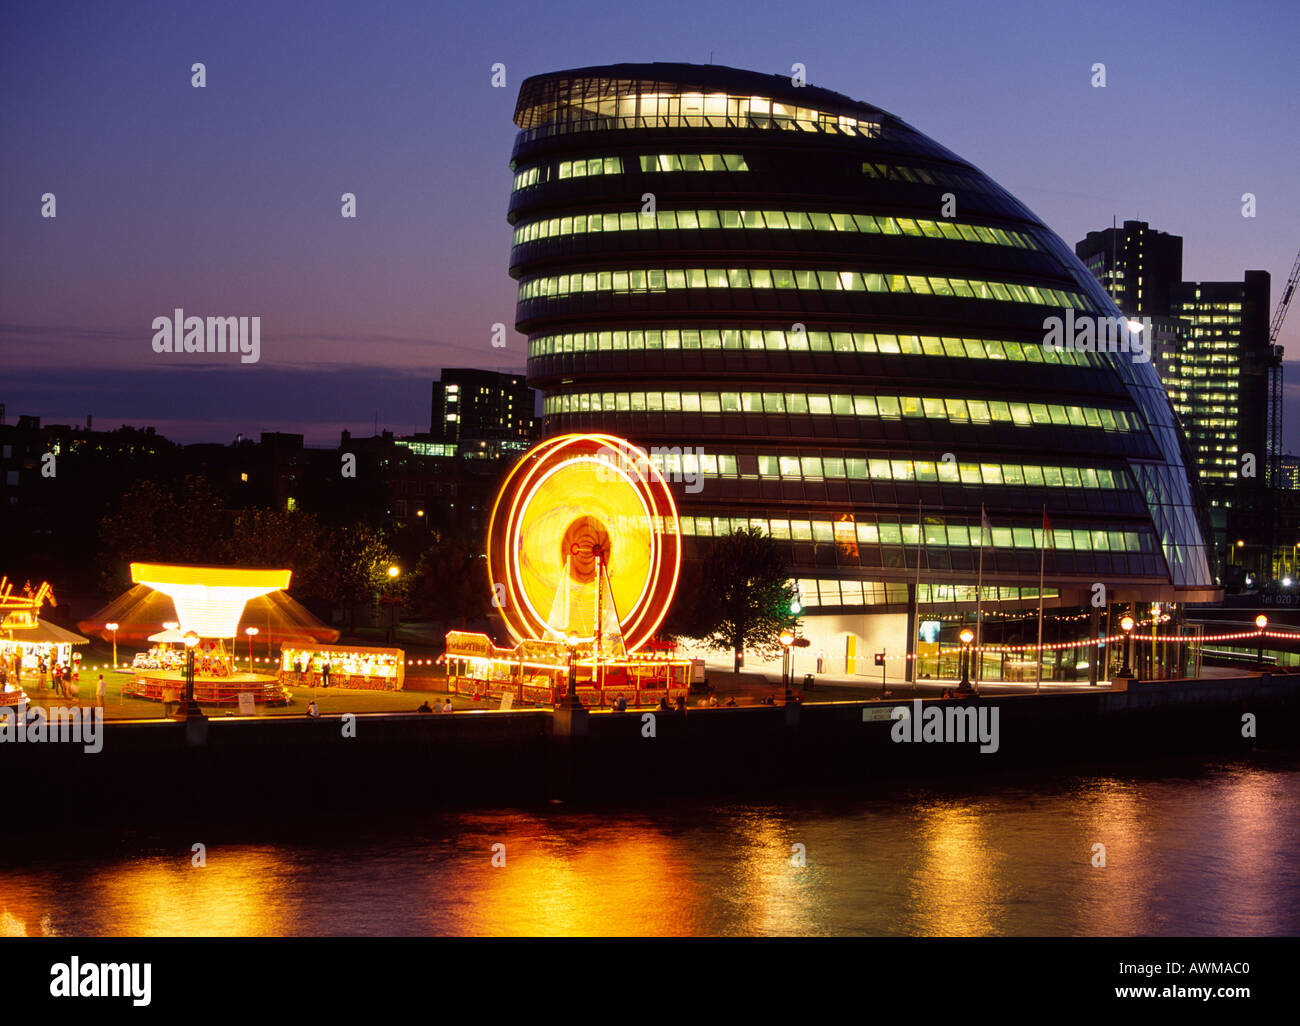 City hall illuminated at night, London, France, Europe Stock Photo